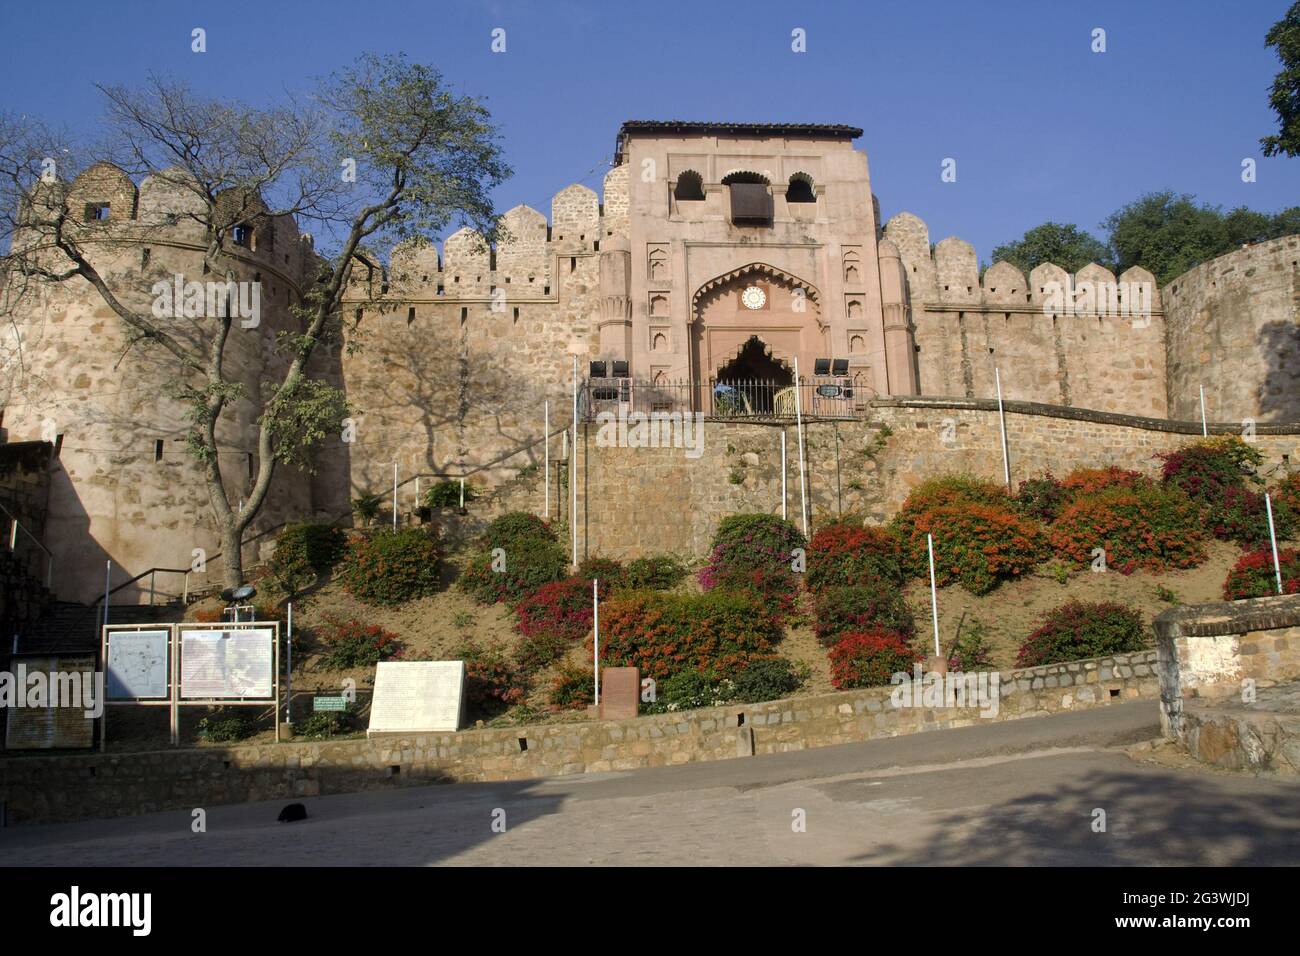 Entrance to Fort at Jhansi Stock Photo